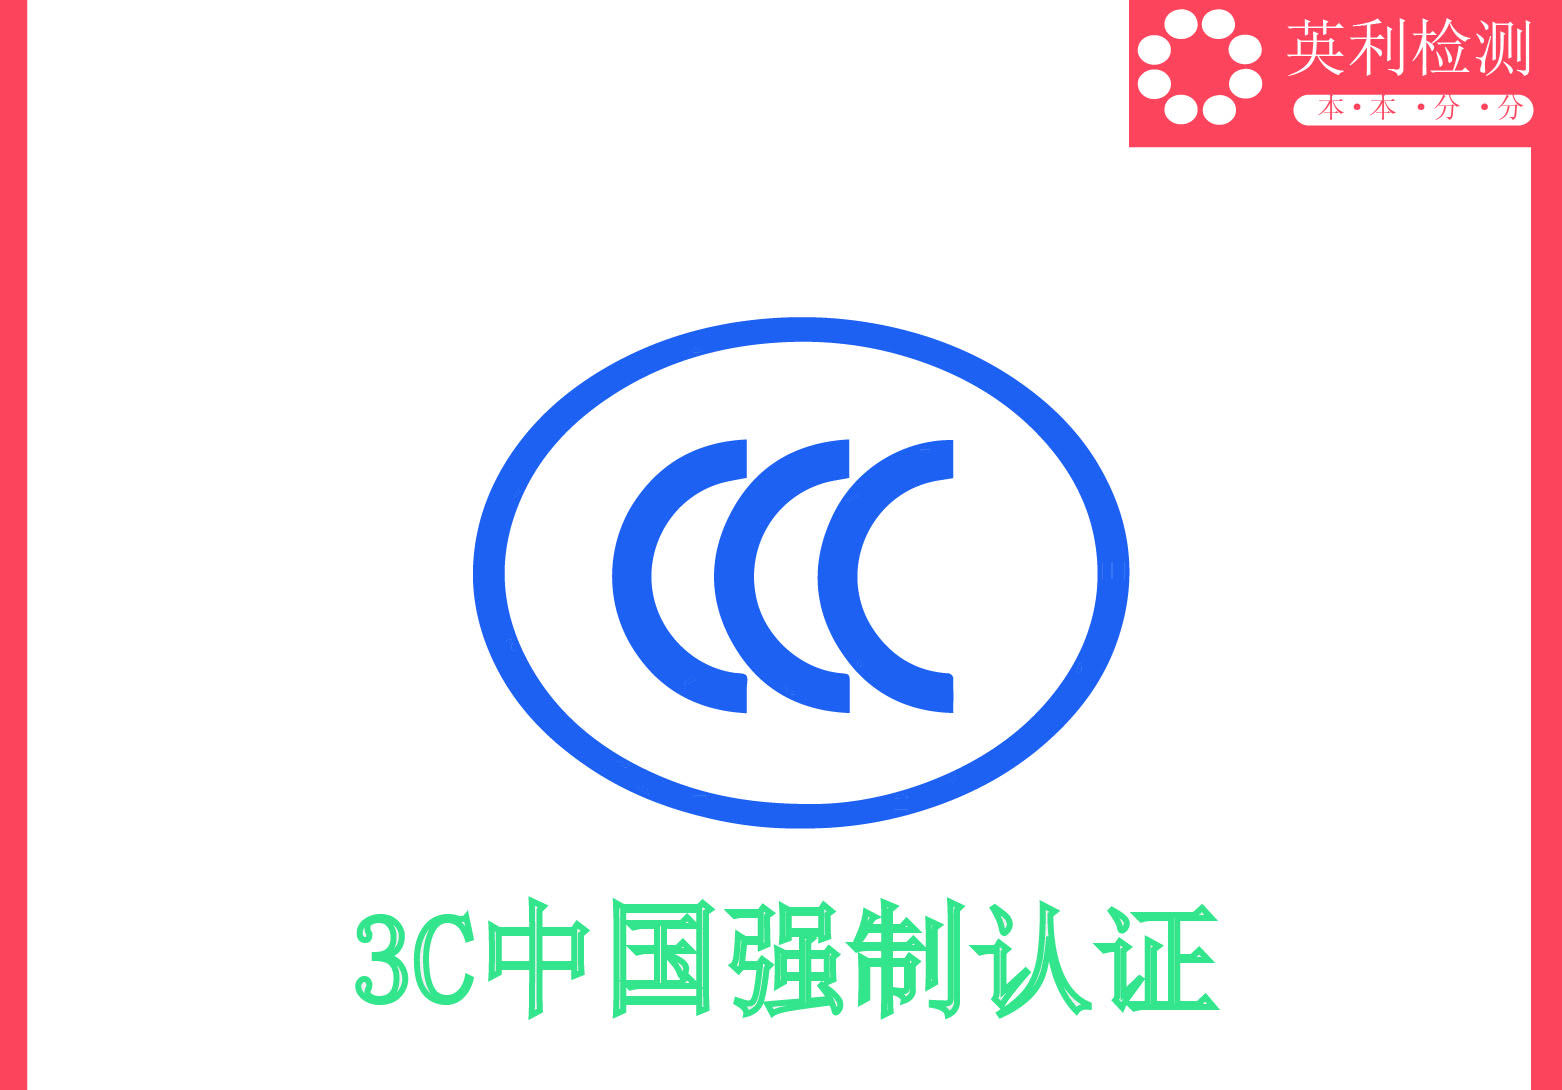 CCC-英利检测.jpg